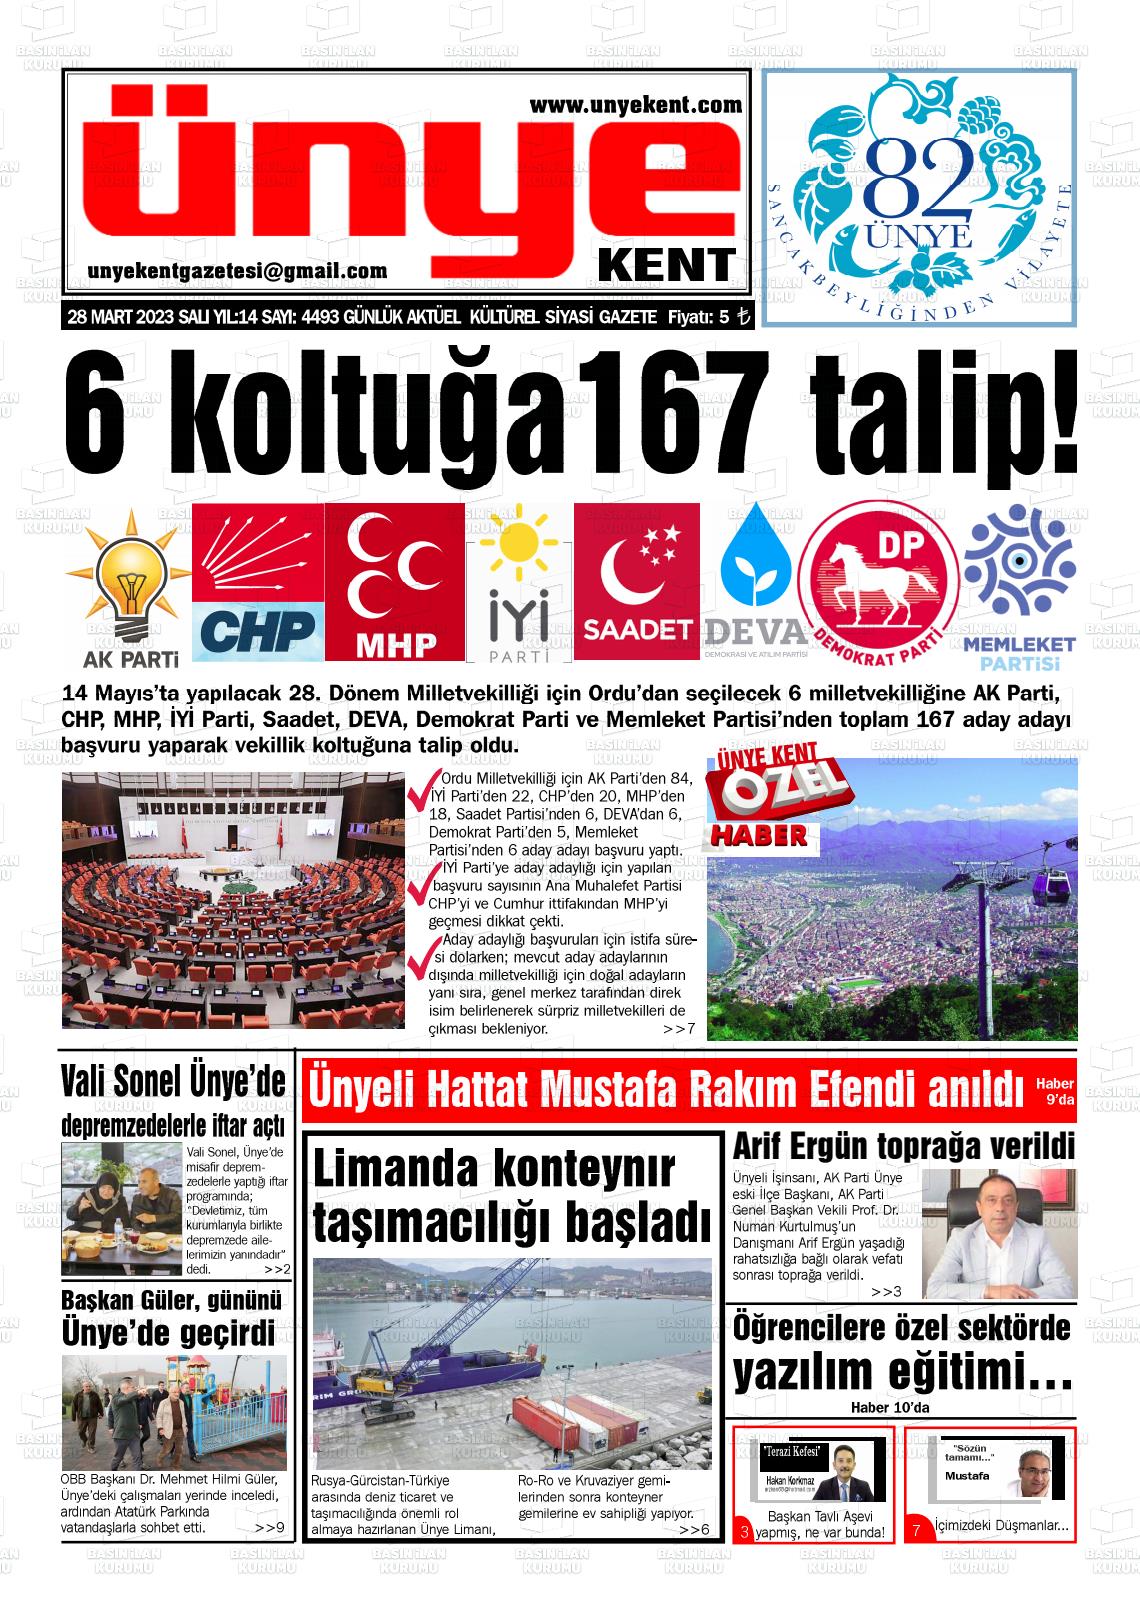 28 Mart 2023 Ünye Kent Gazete Manşeti